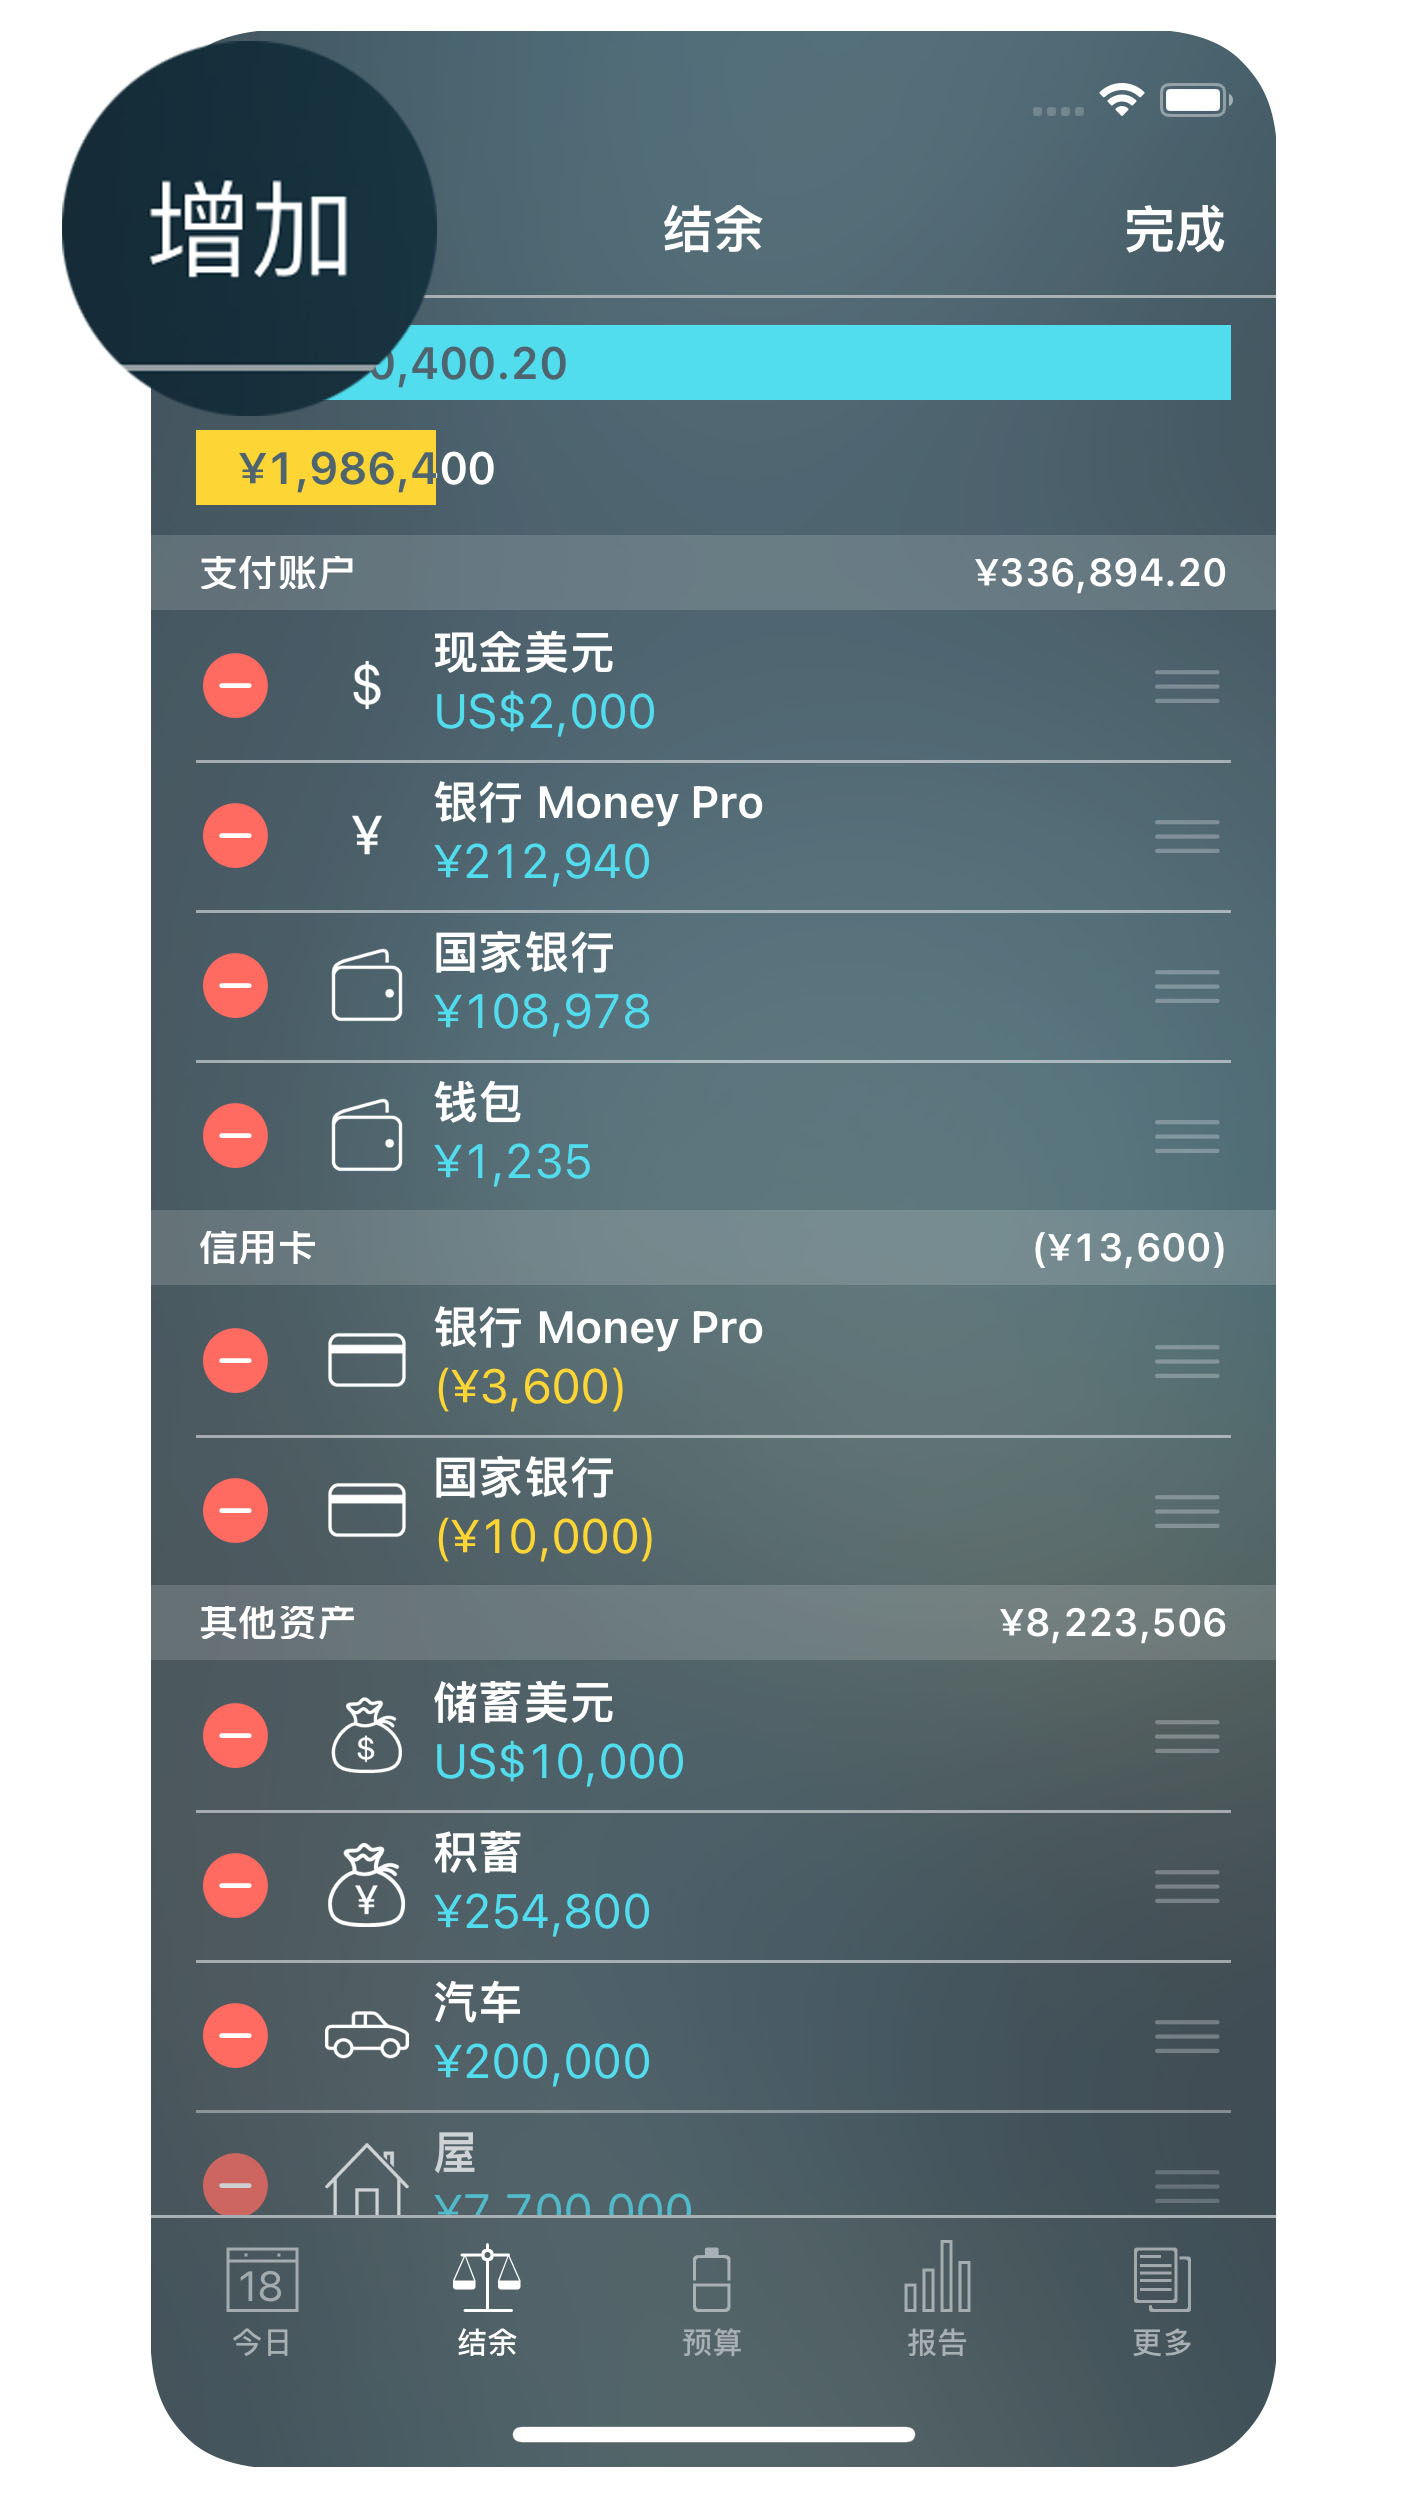 Money Pro - 账户 - 增加 - iPhone